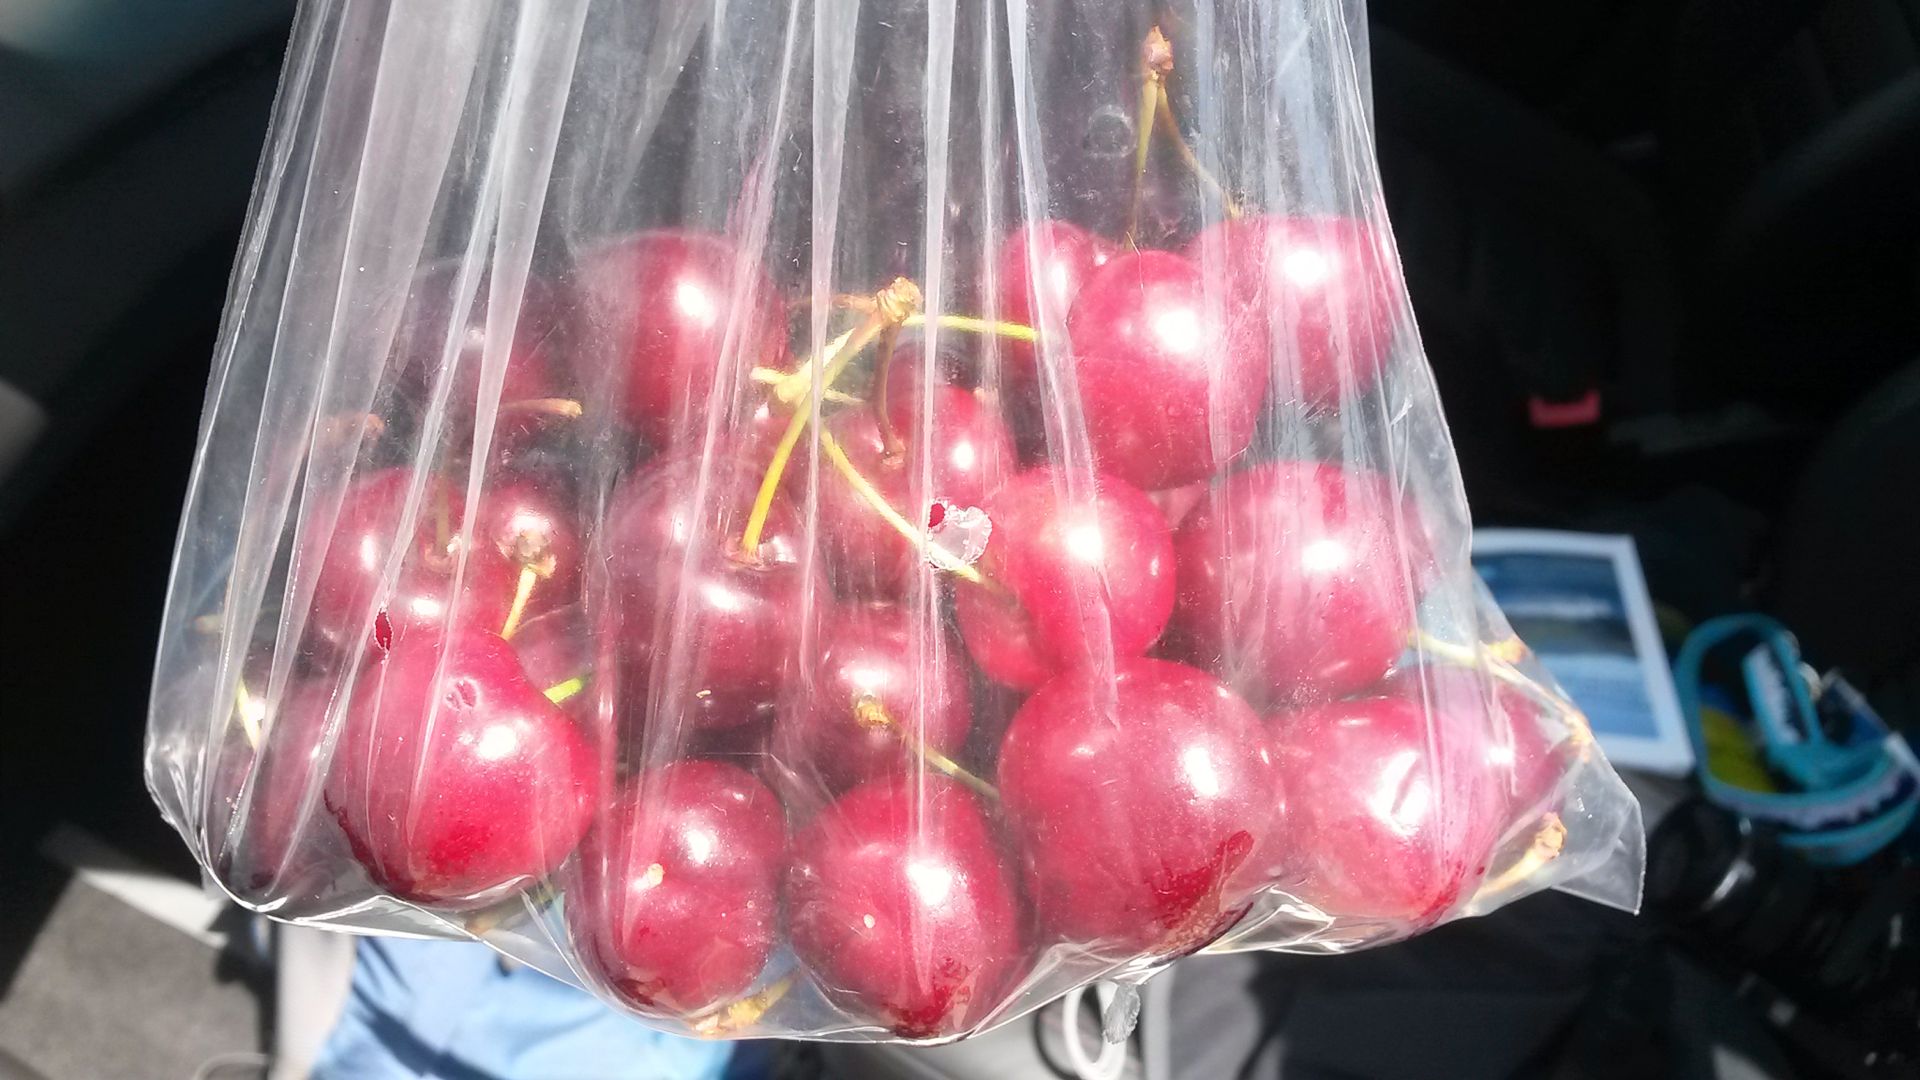 Cherries for $5